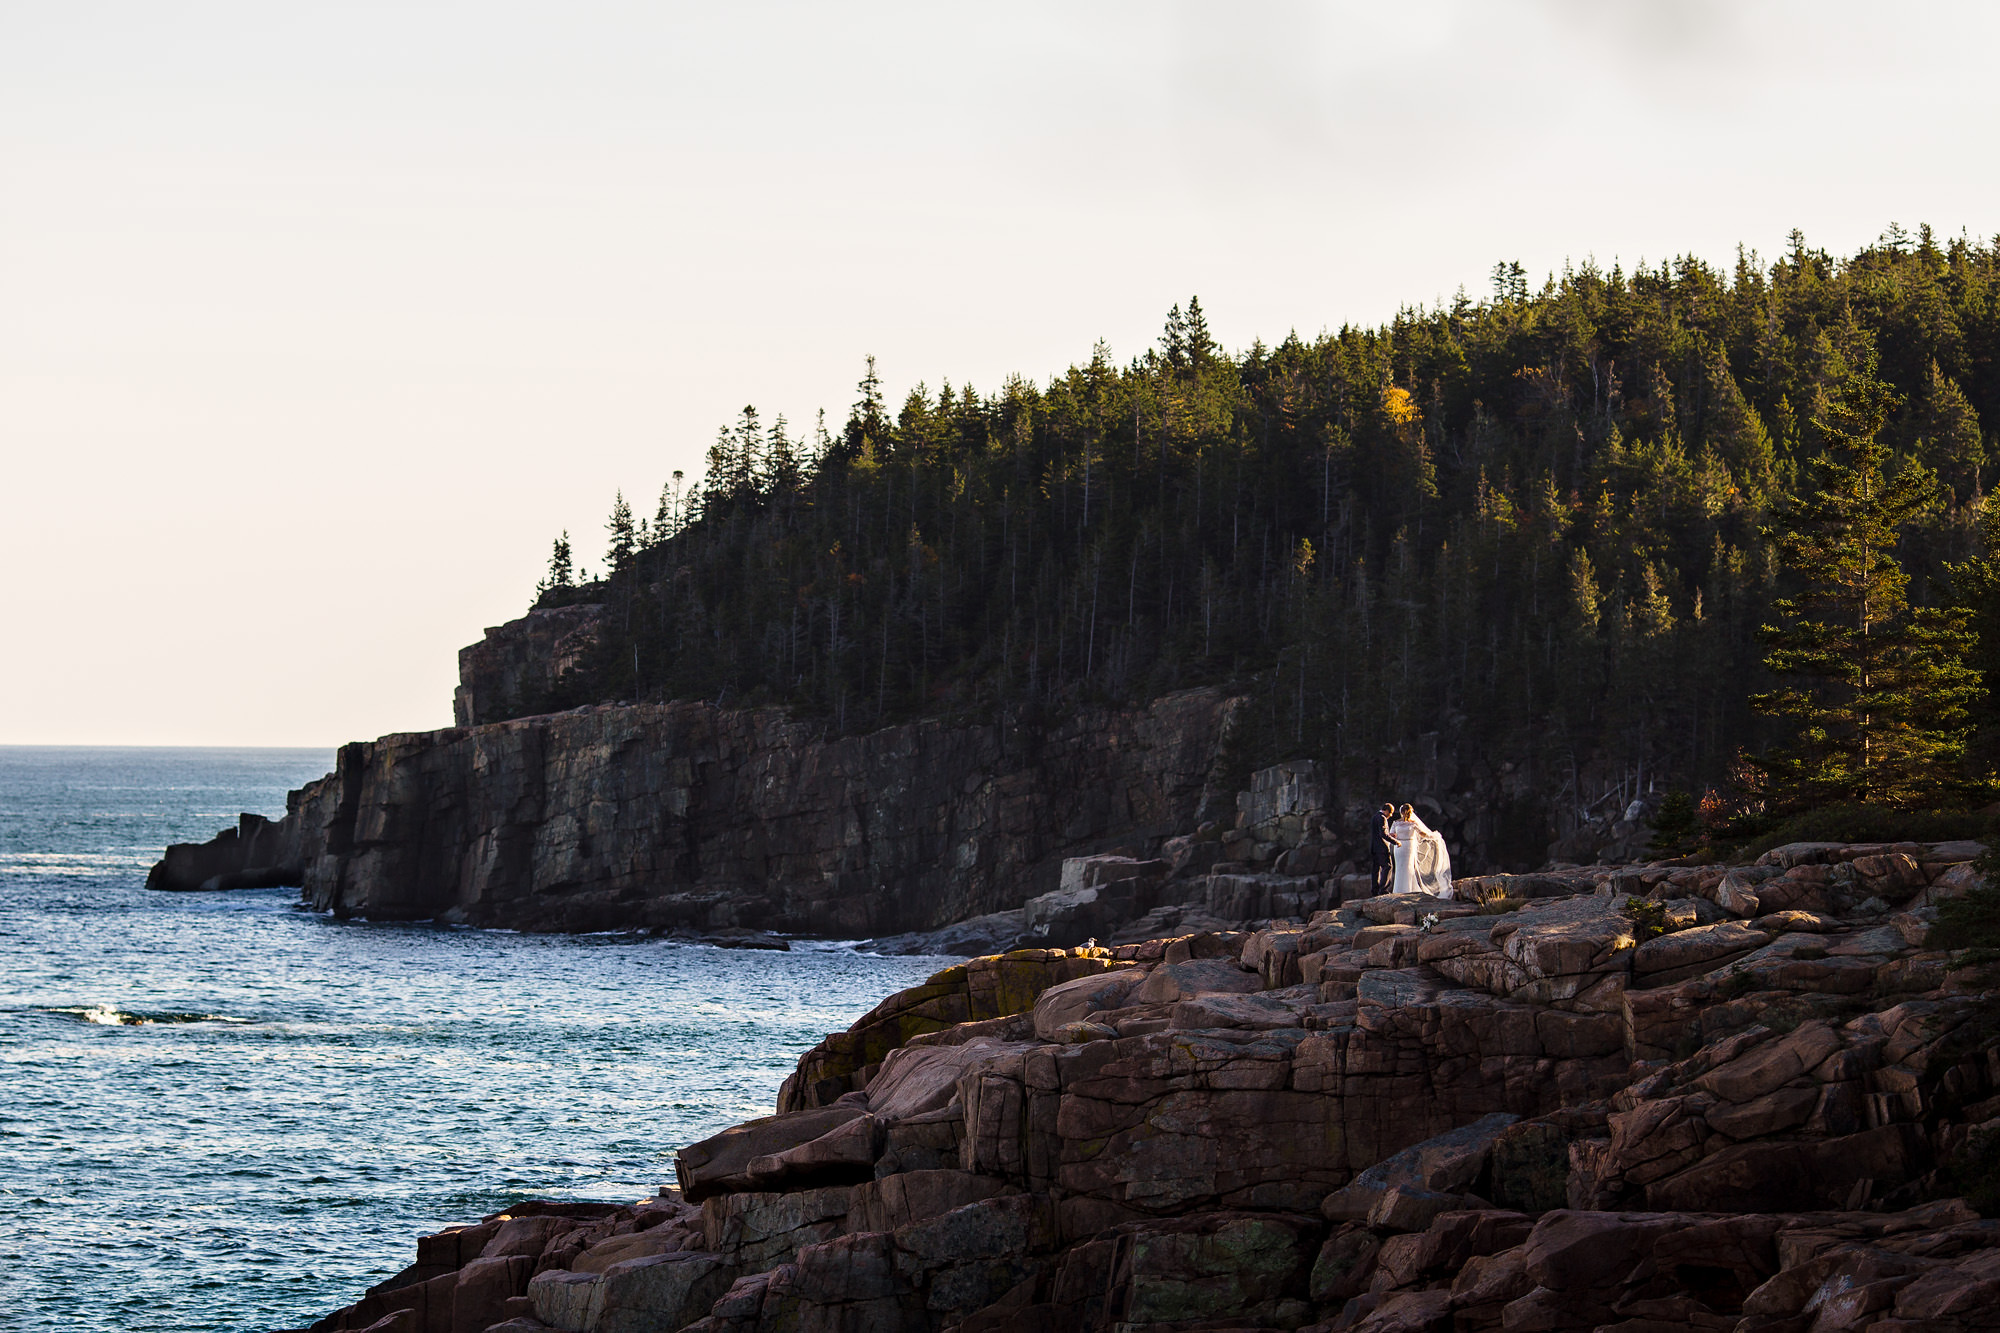 Wedding portraits near Otter Cliffs in Acadia National Park